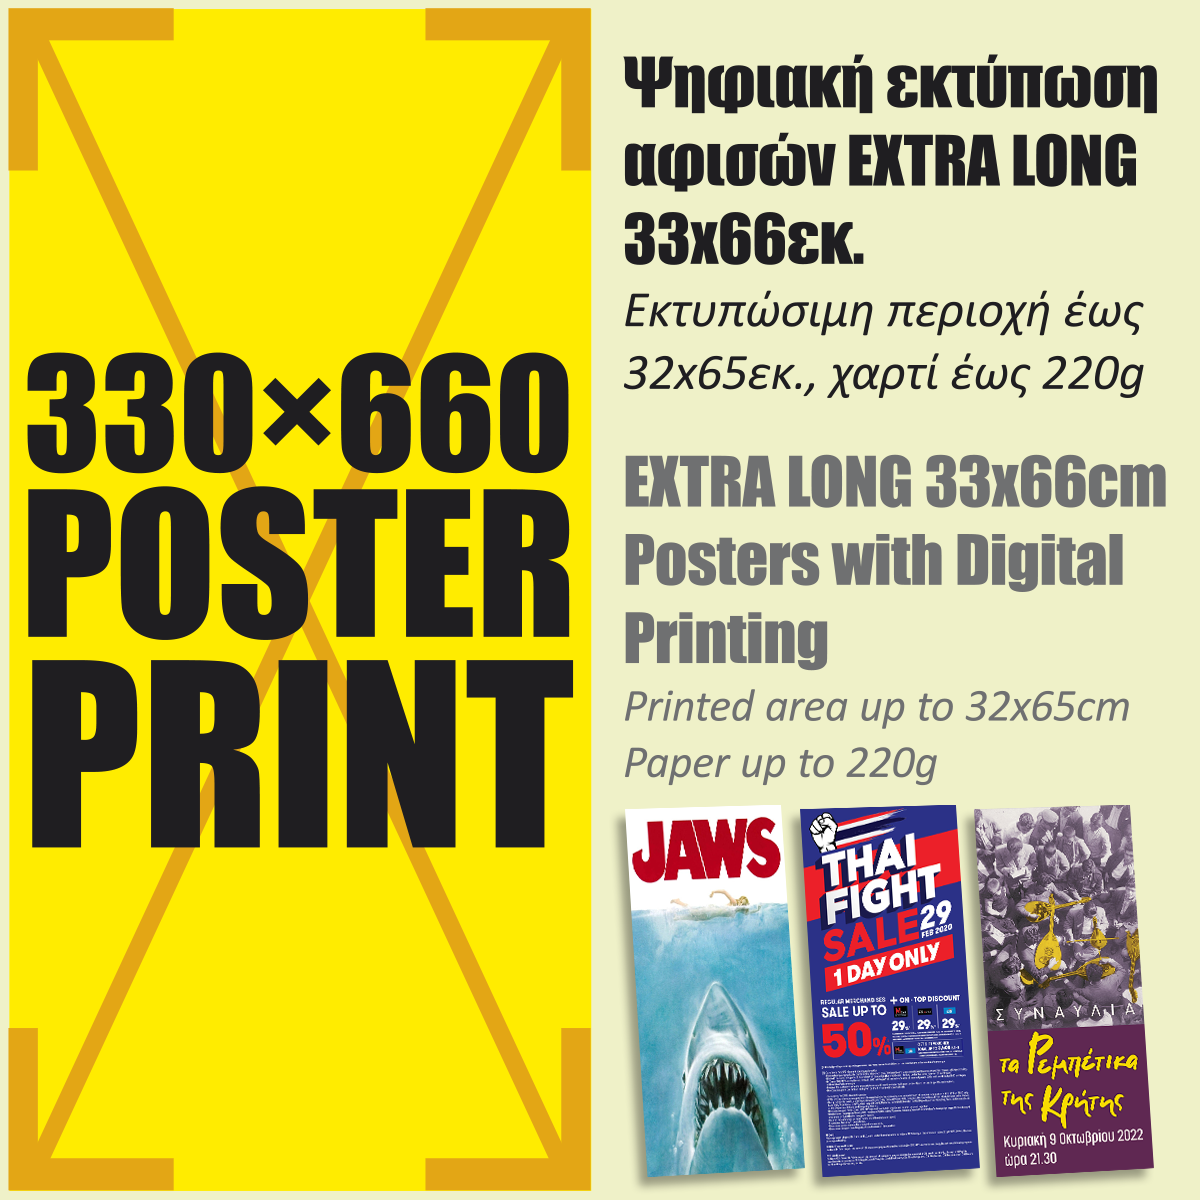 Extra long 33x66 poster printing